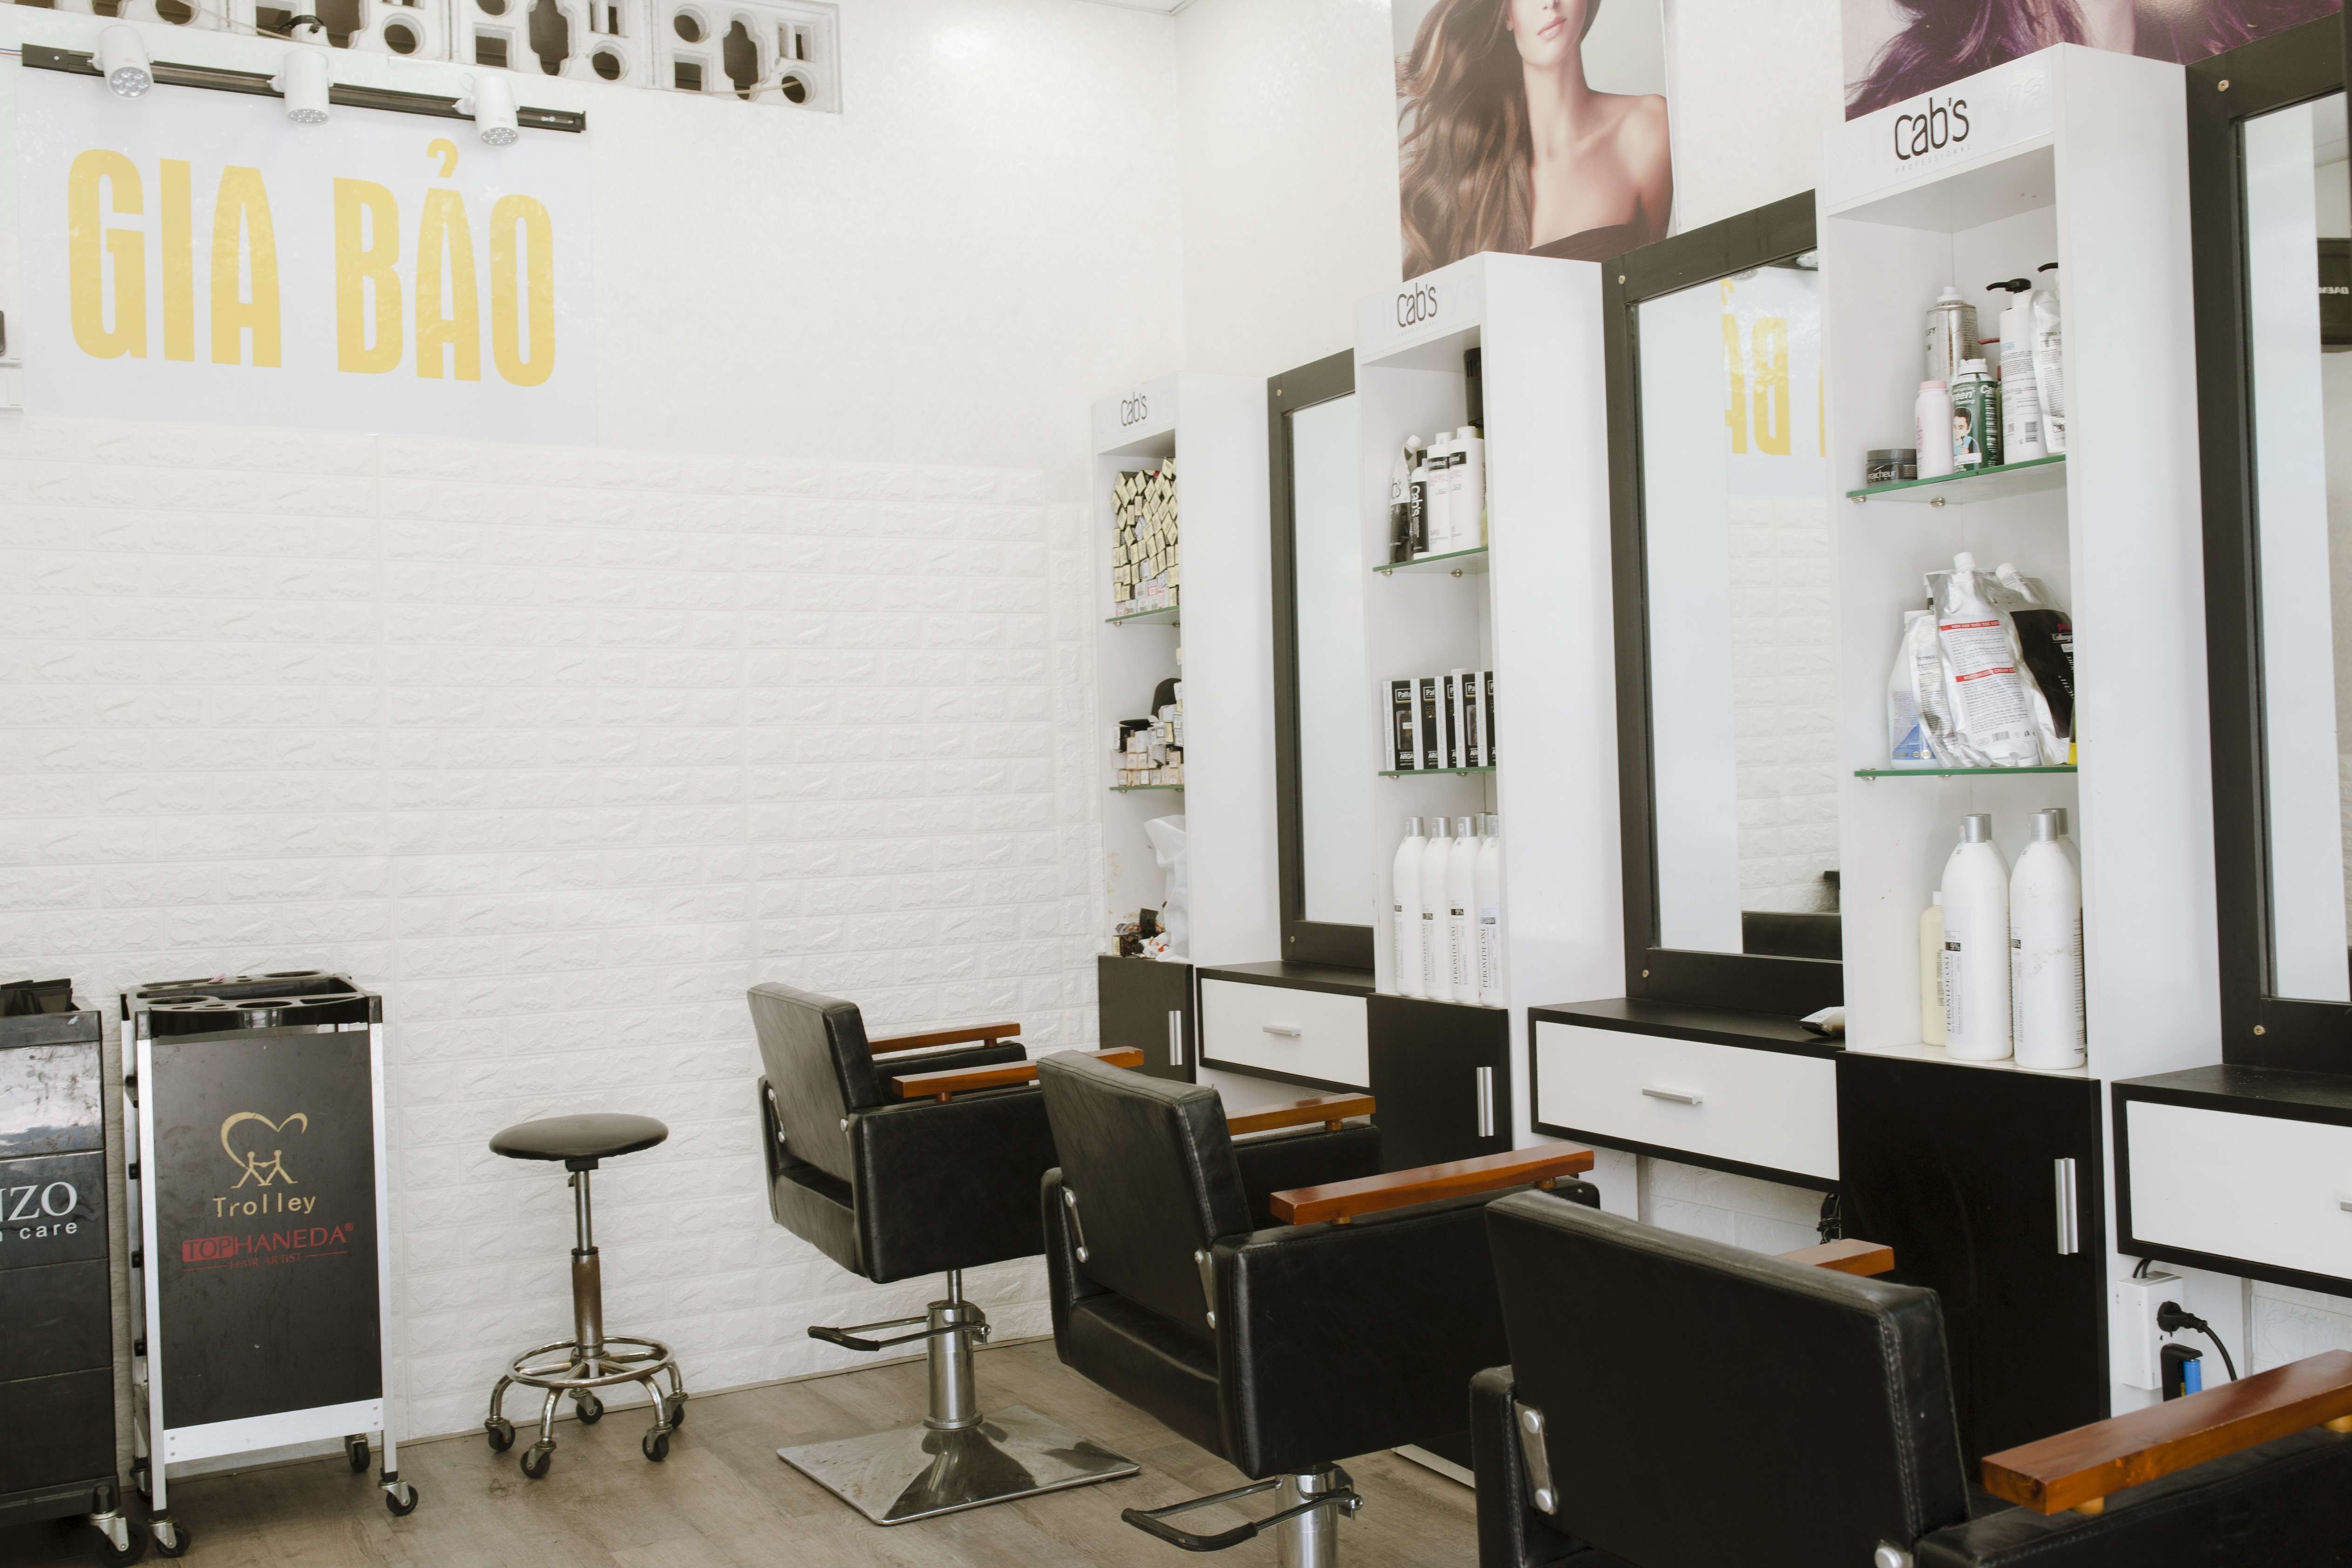 Gia Bảo Hair Salon